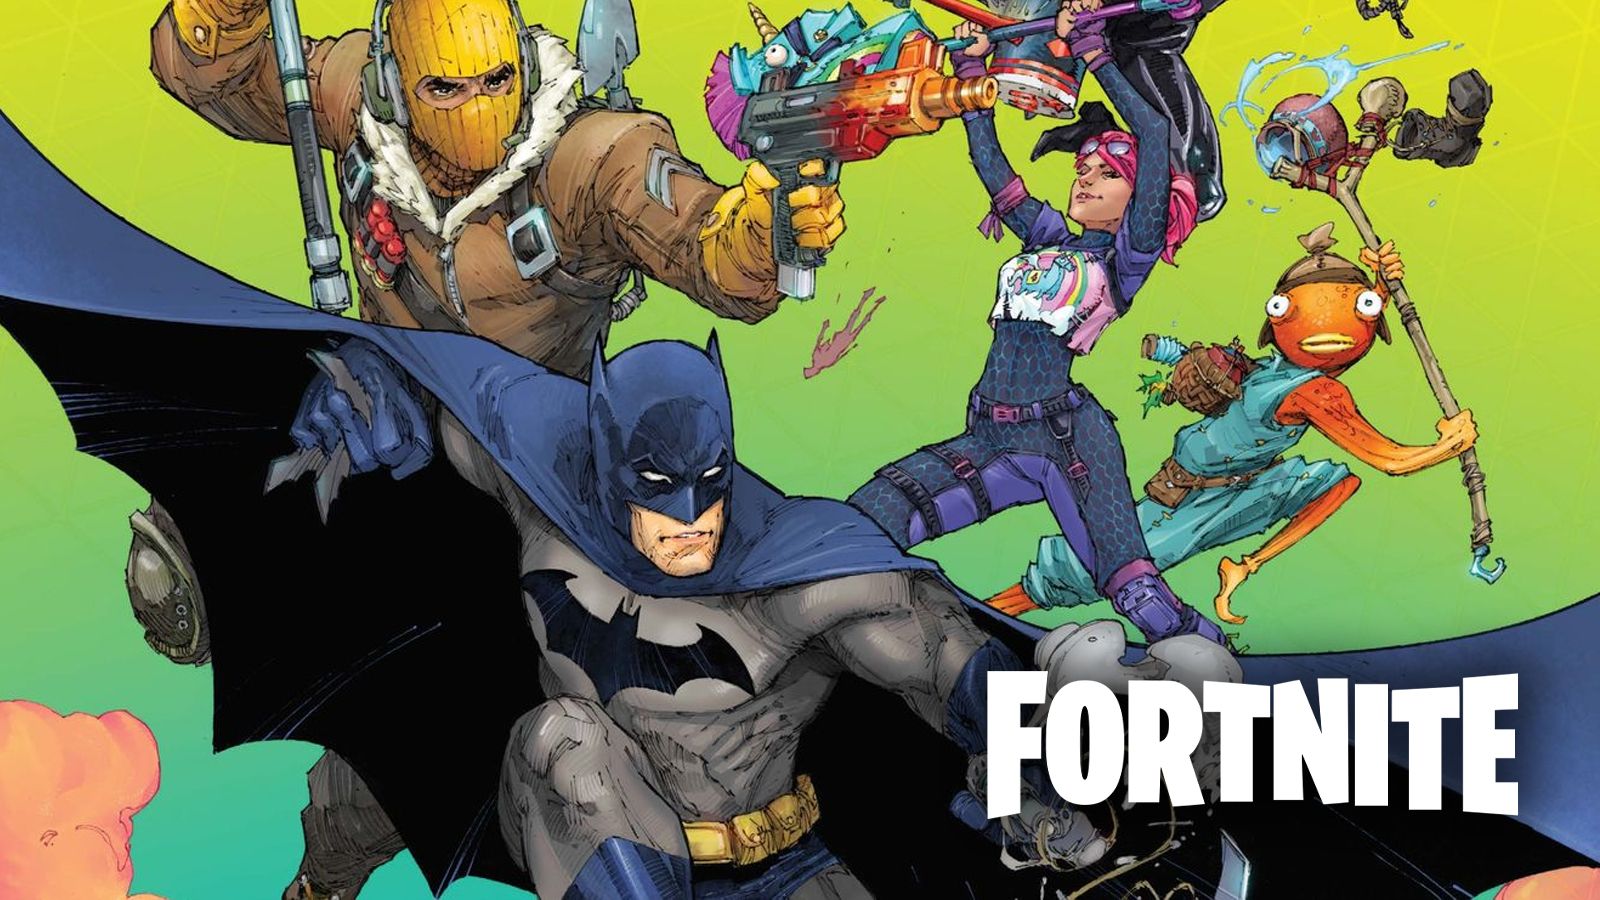 Fortnite x Batman comic leaks has players hopeful for Season 6 DC crossover